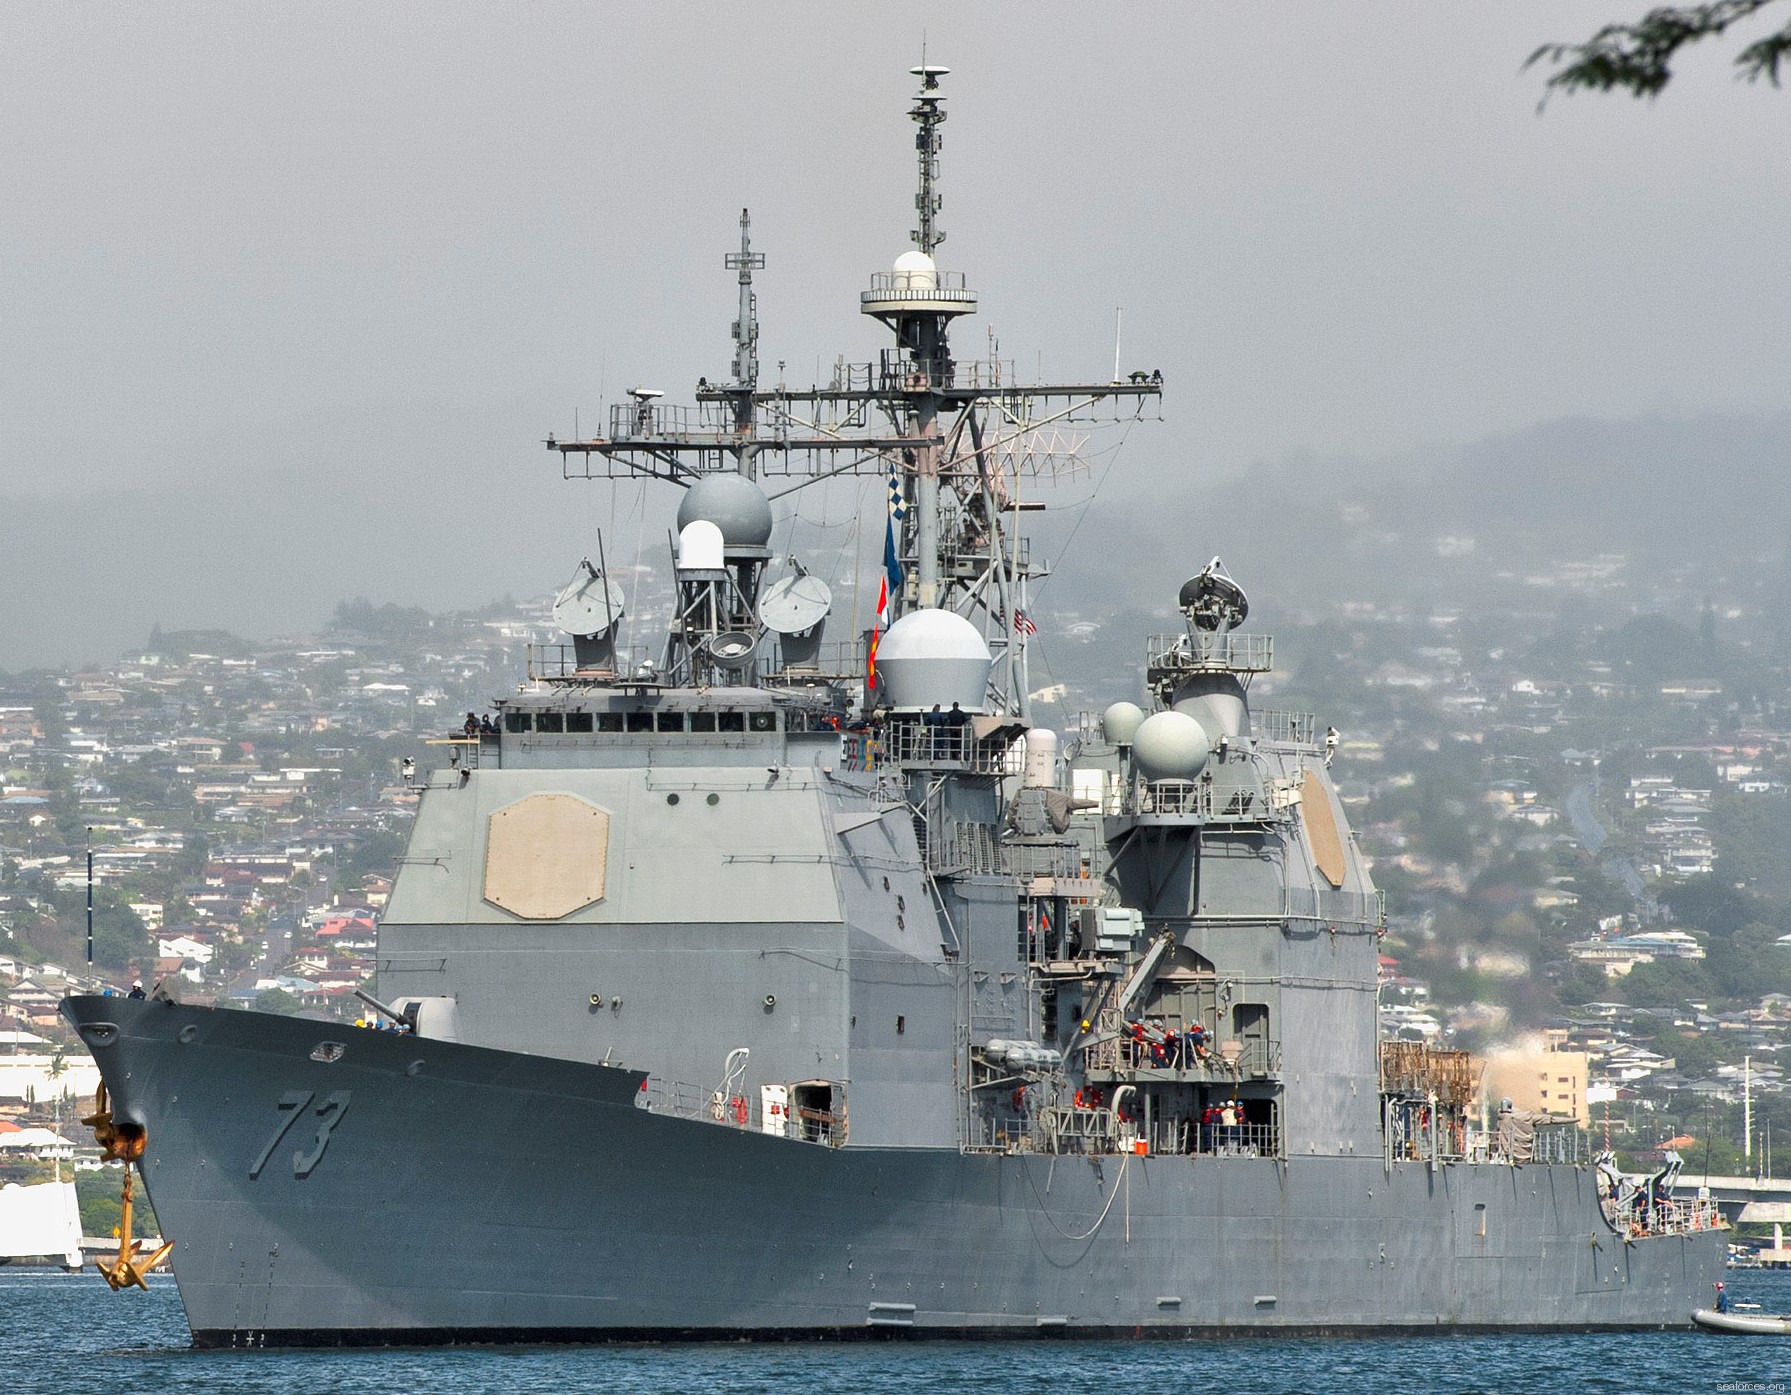 cg-73 uss port royal ticonderoga class guided missile cruiser navy 11 joint base pearl harbor hickam hawaii